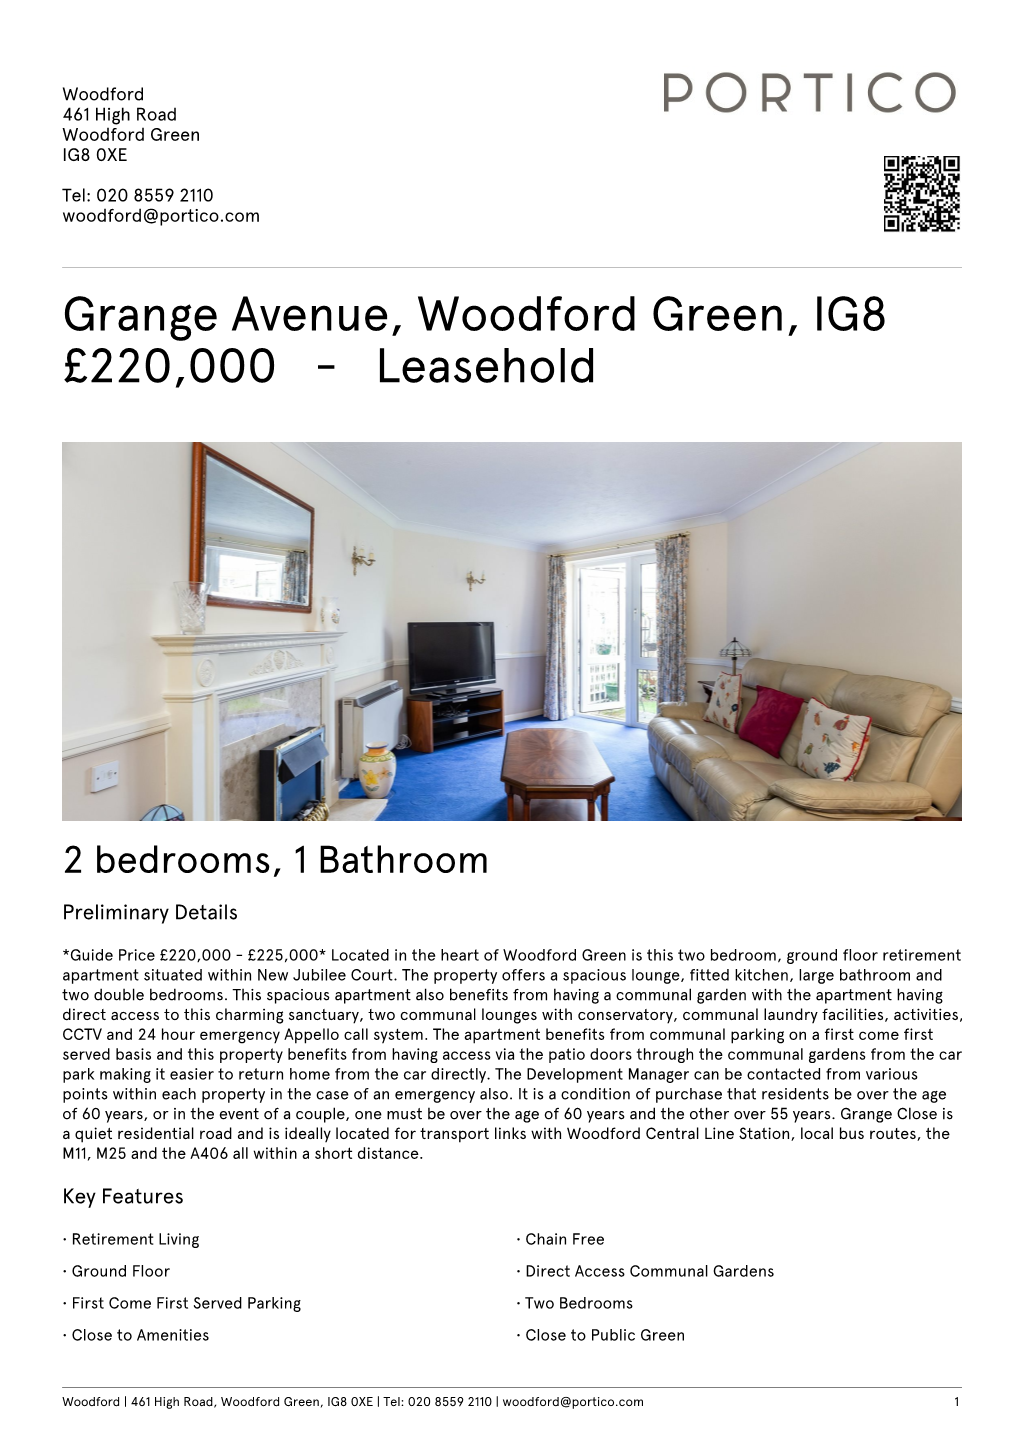 Grange Avenue, Woodford Green, IG8 £220000